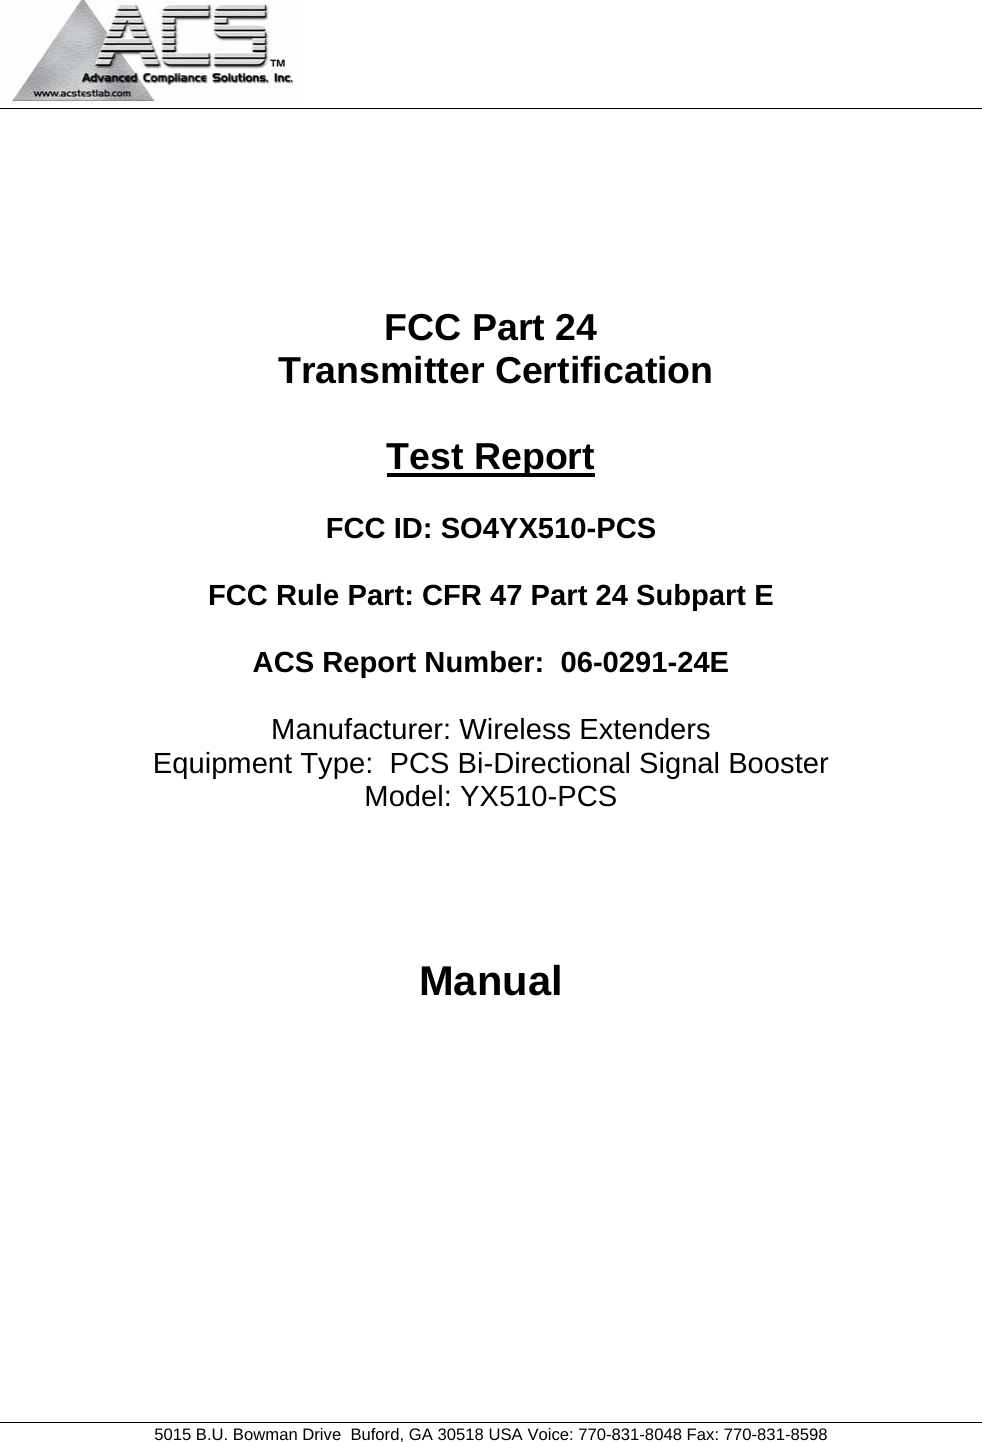                                            5015 B.U. Bowman Drive  Buford, GA 30518 USA Voice: 770-831-8048 Fax: 770-831-8598       FCC Part 24  Transmitter Certification  Test Report  FCC ID: SO4YX510-PCS  FCC Rule Part: CFR 47 Part 24 Subpart E  ACS Report Number:  06-0291-24E   Manufacturer: Wireless Extenders Equipment Type:  PCS Bi-Directional Signal Booster Model: YX510-PCS     Manual 